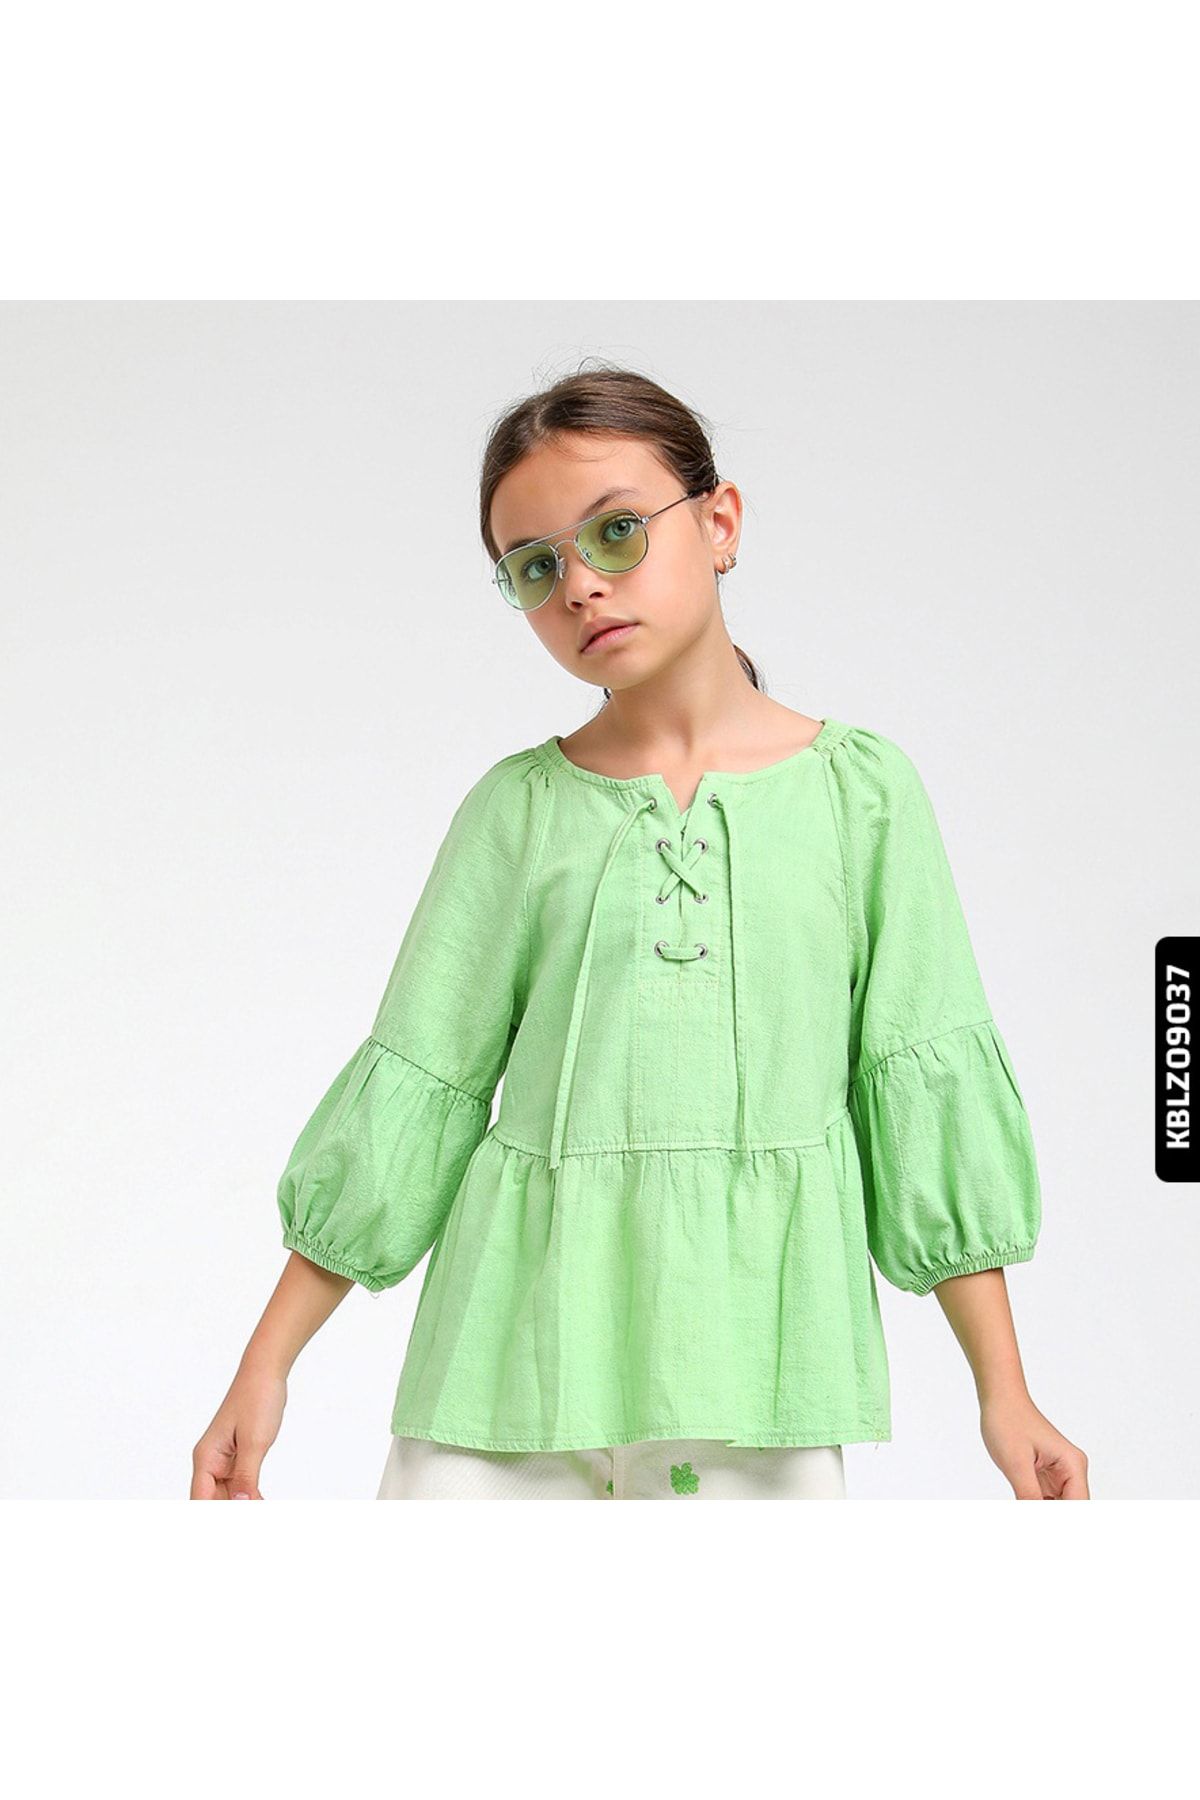 XO Kids %100 Pamuklu Kız Çocuk Yeşil Bluz 5-9 Yaş 780